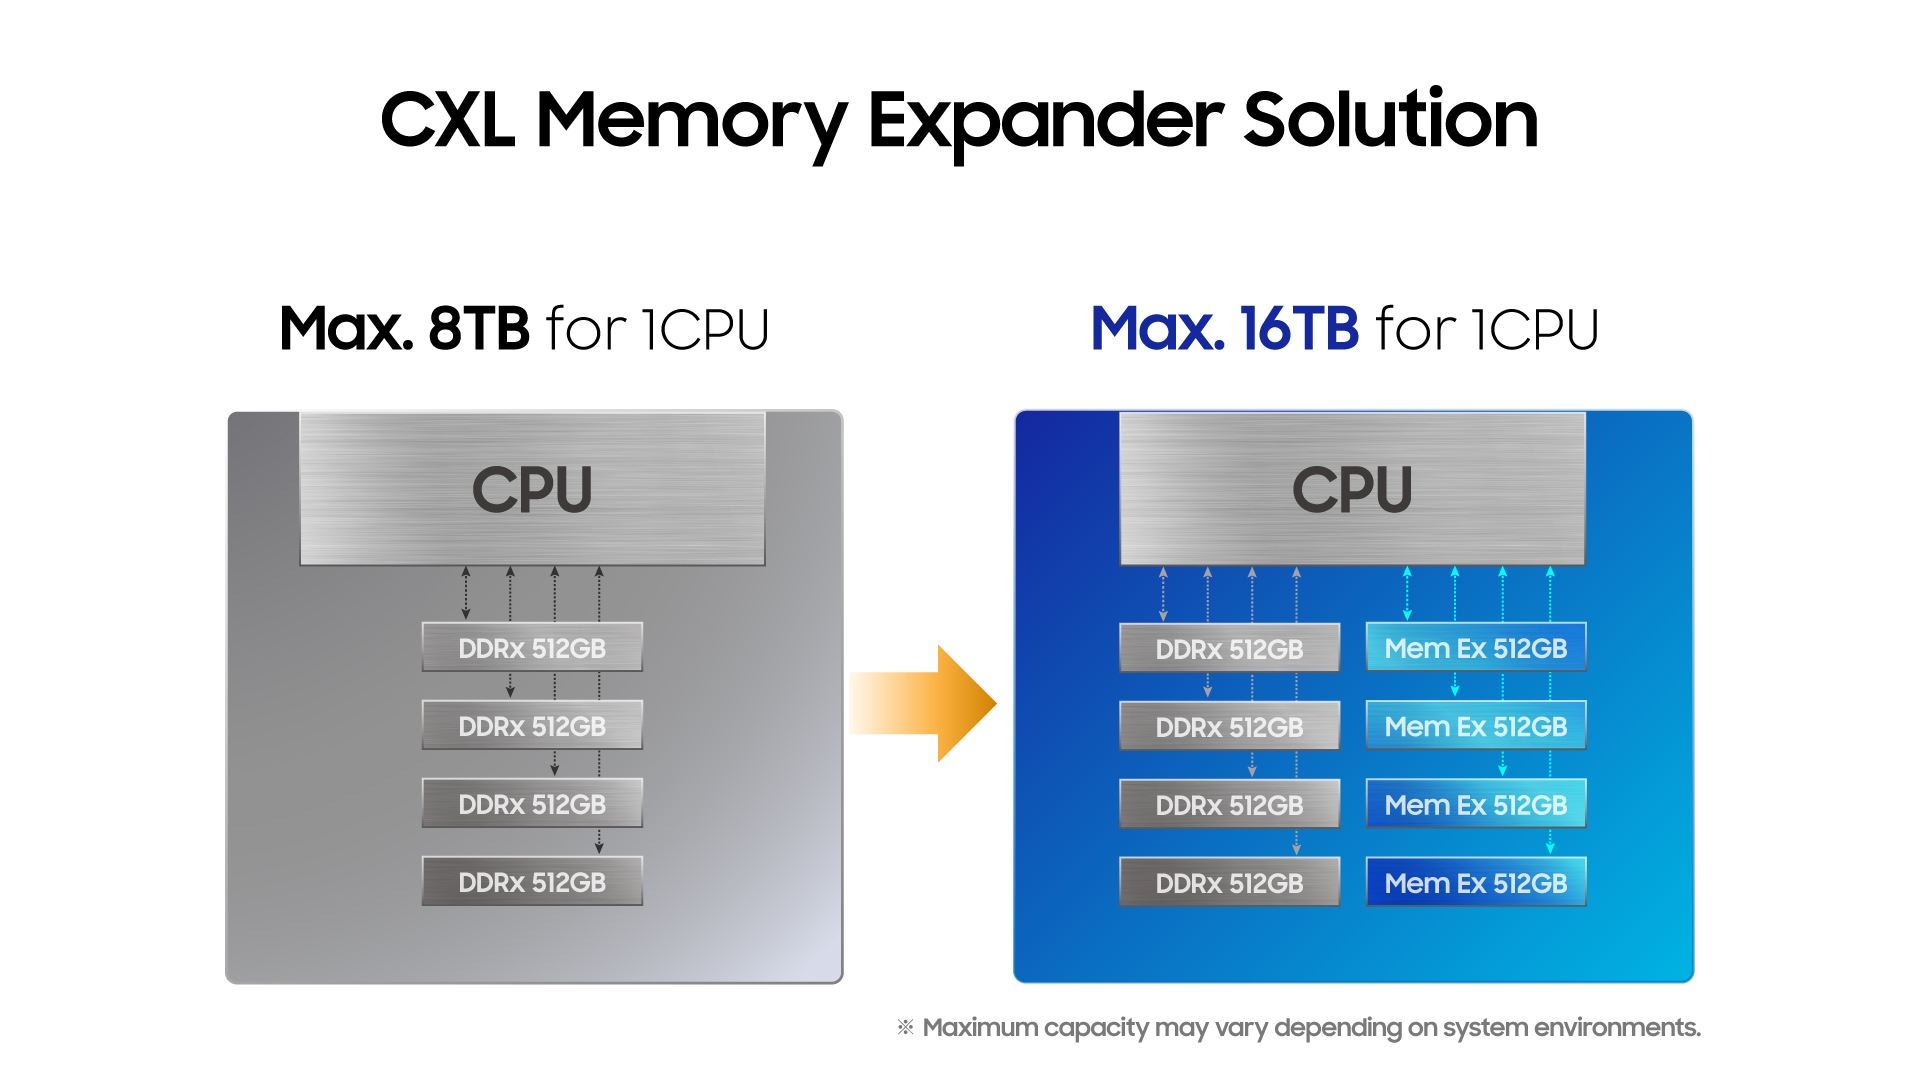 CXL Memory Expander Solution 8TB and 16TB comparison images